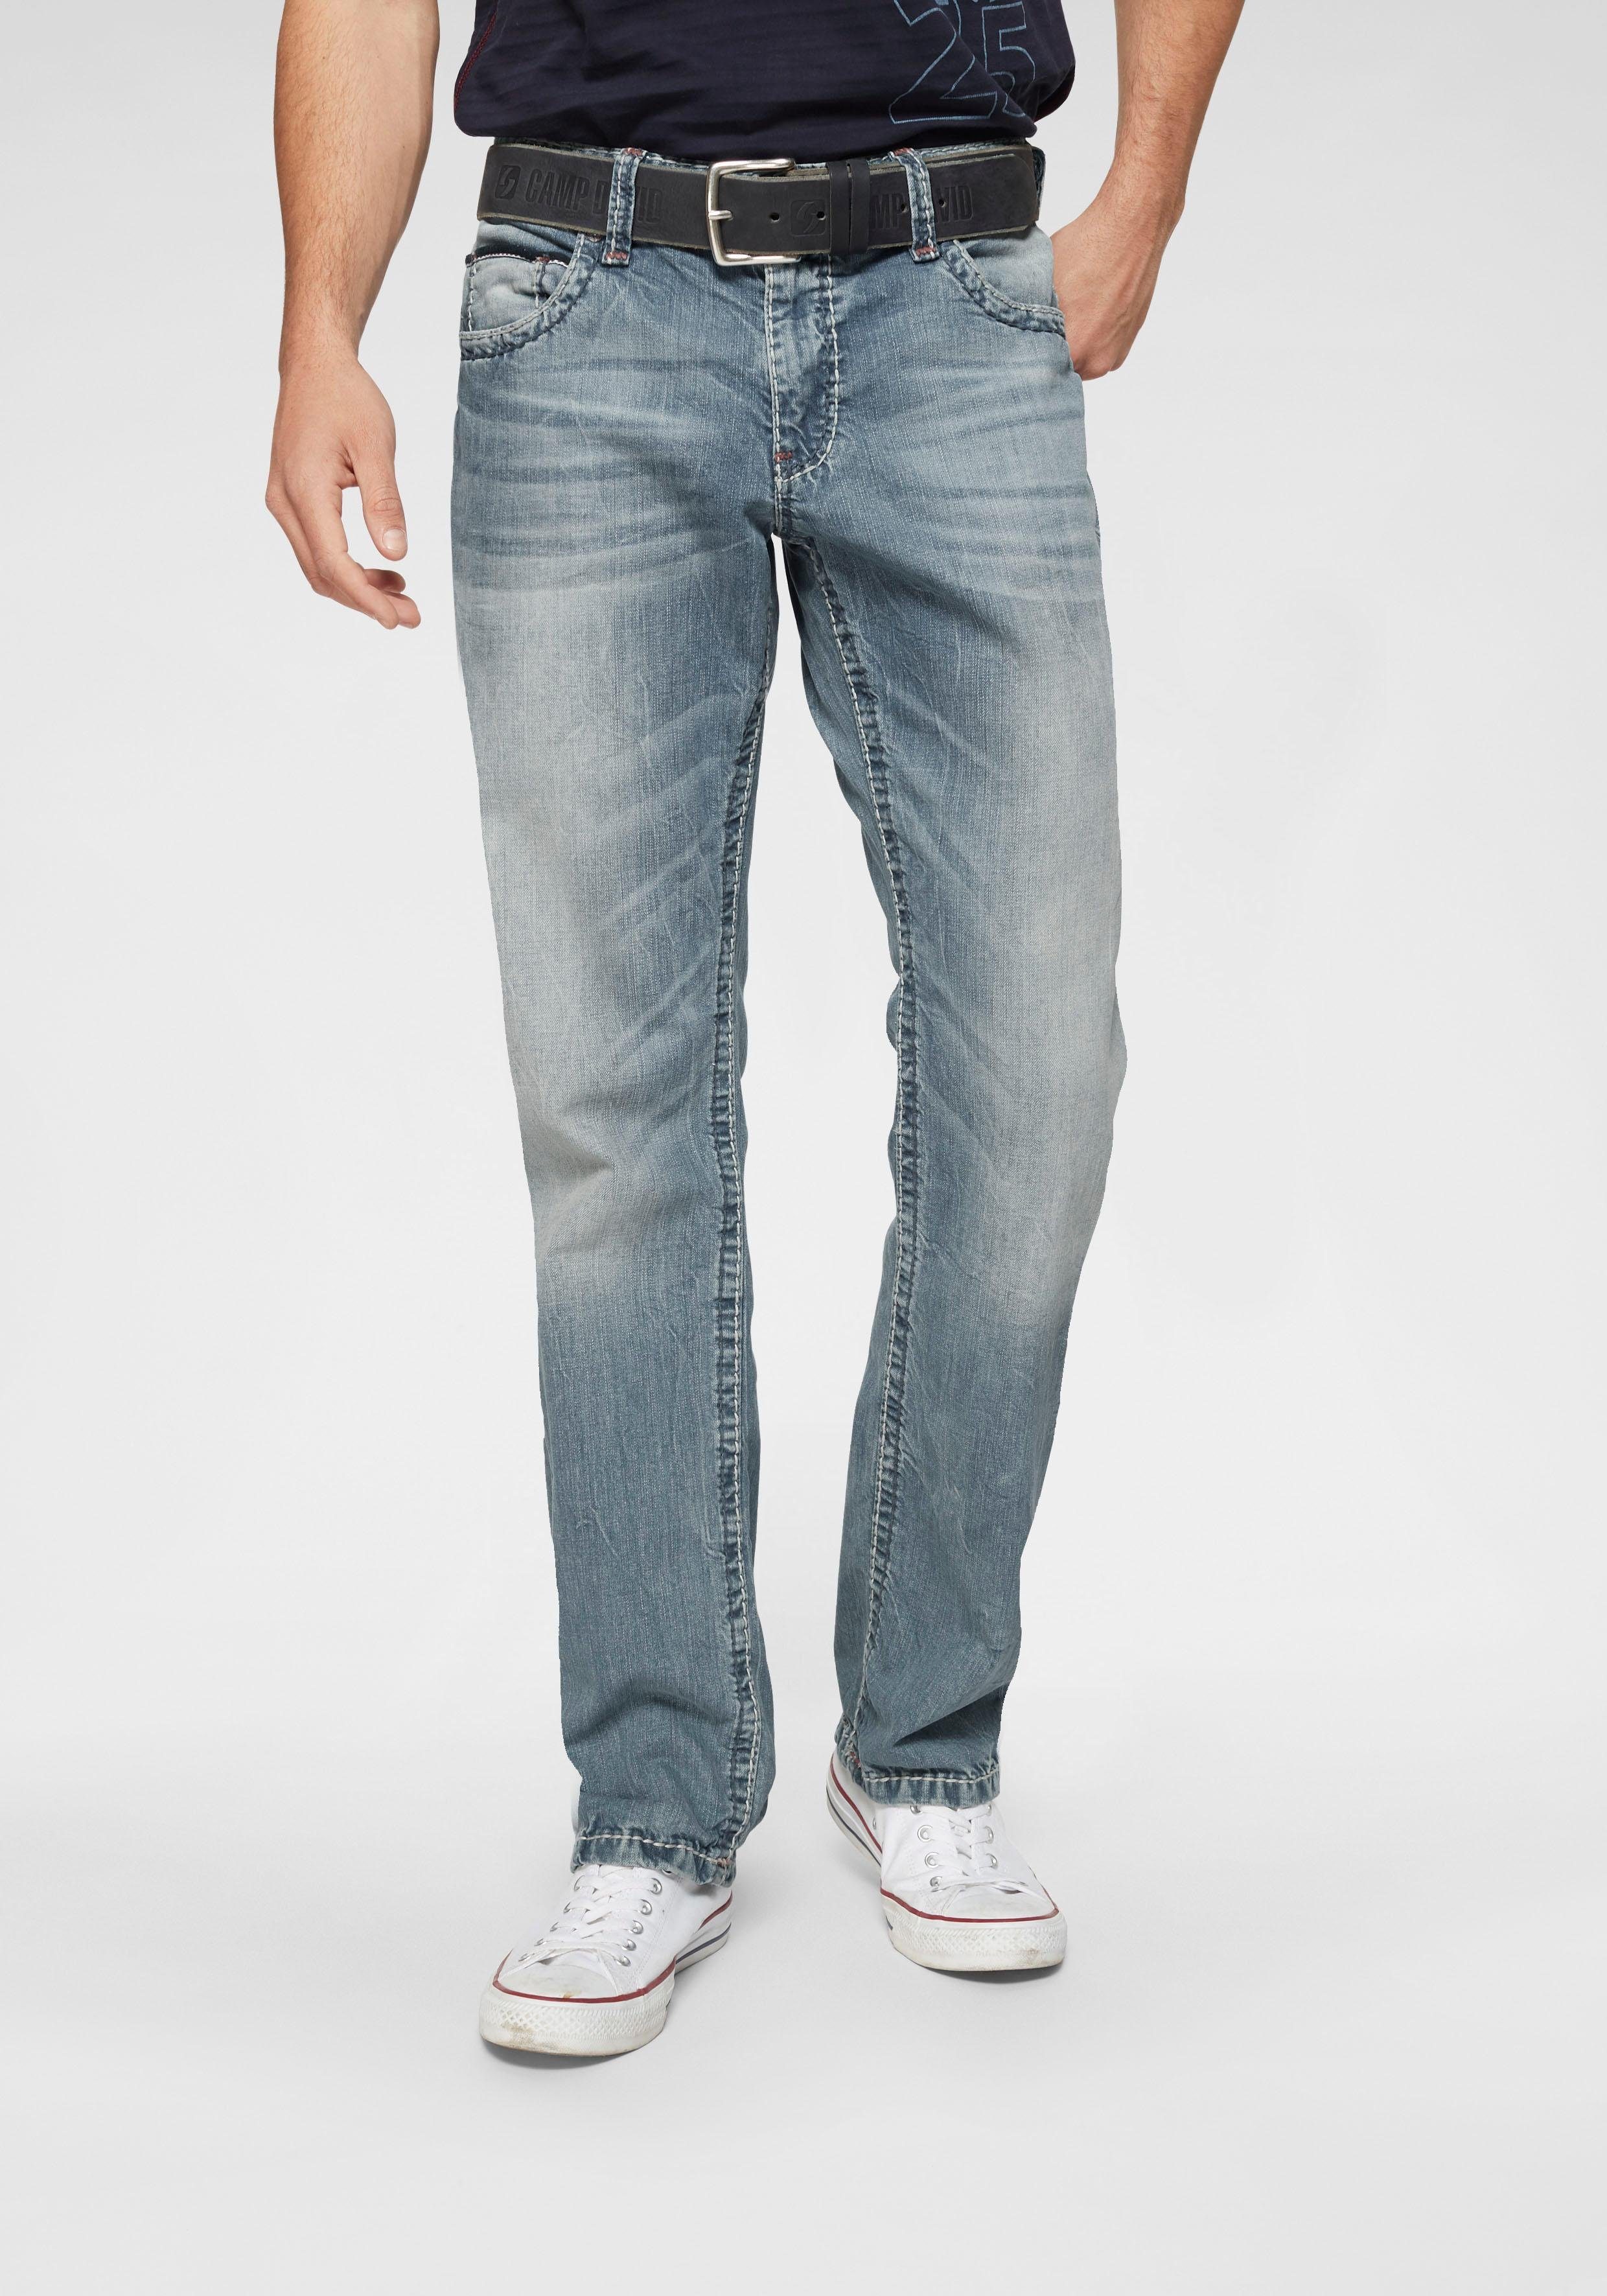 CAMP DAVID Loose-fit-Jeans »CO:NO:C622« mit markanten Nähten online kaufen  | OTTO